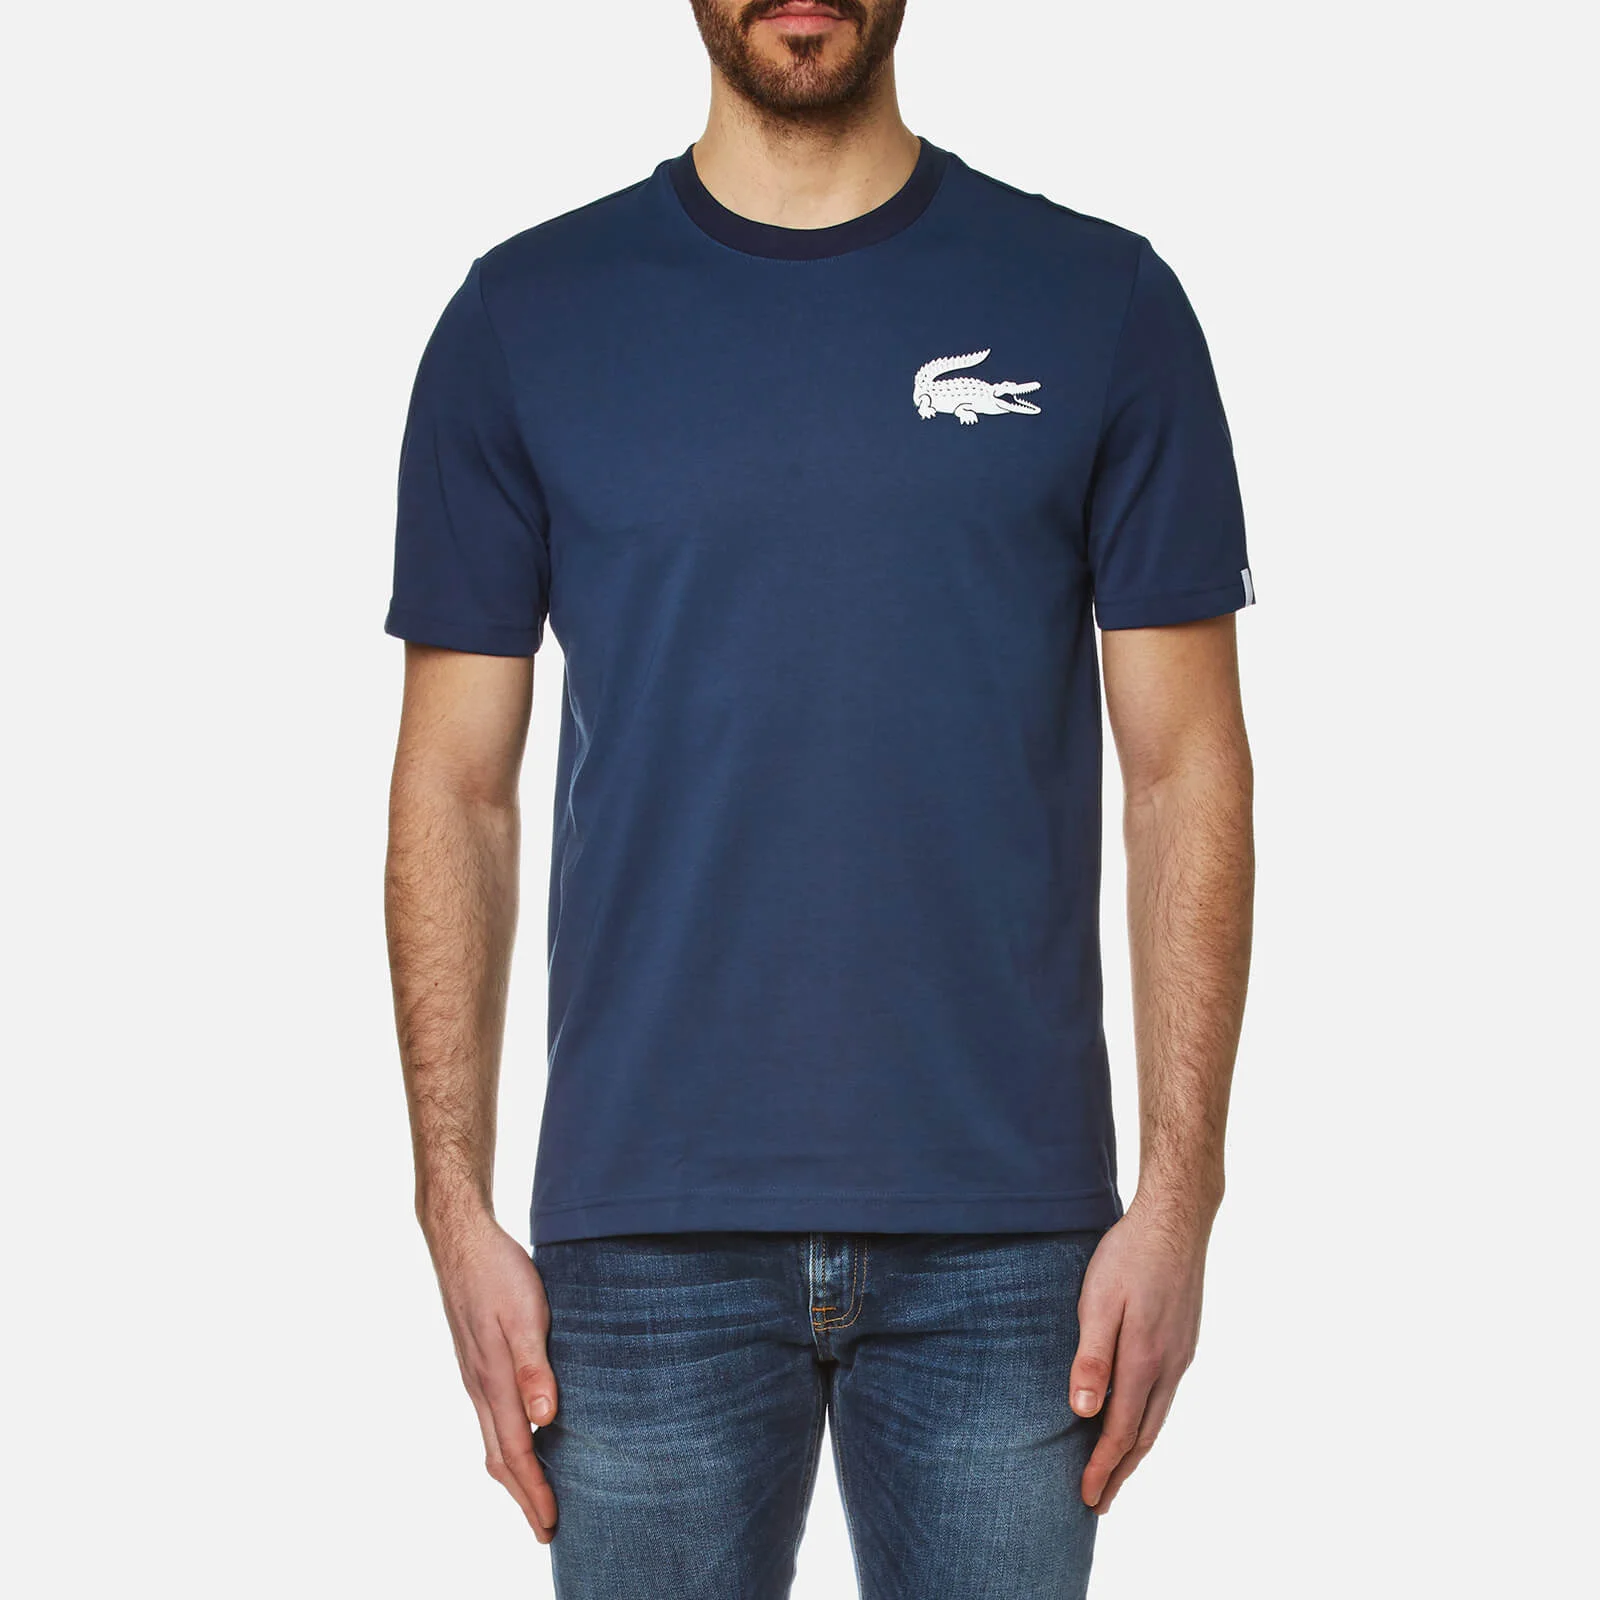 Lacoste L!ve Men's Large Logo Crew Neck T-Shirt - Ship/White/Navy Blue Image 1